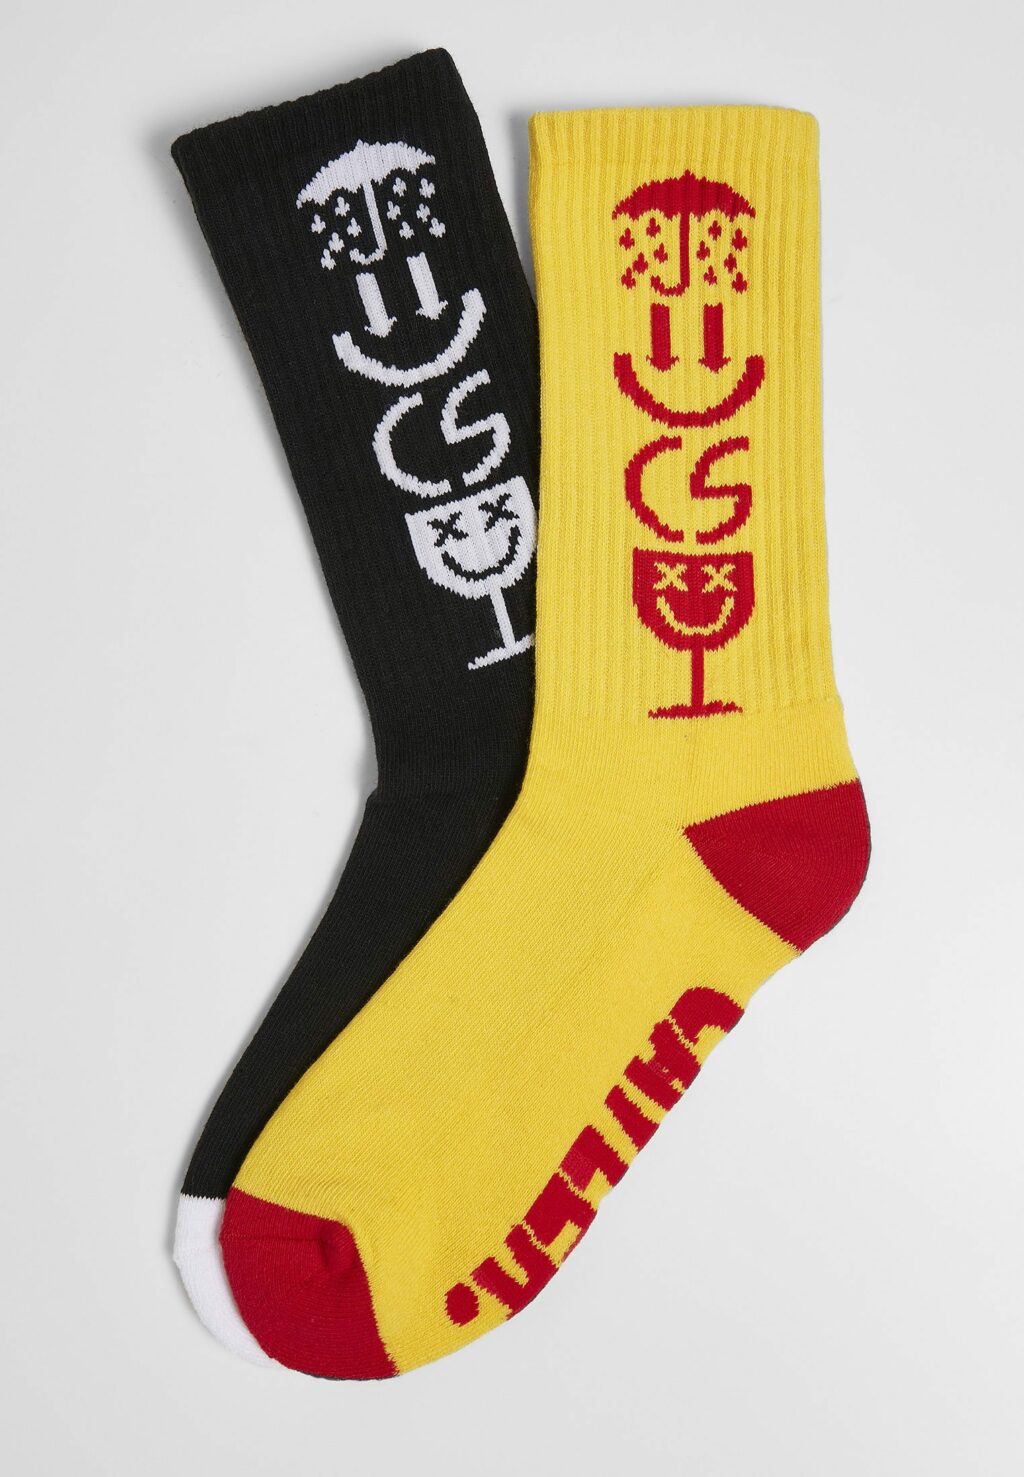 Iconic Icons Socks 2-Pack black/yellow CS2676